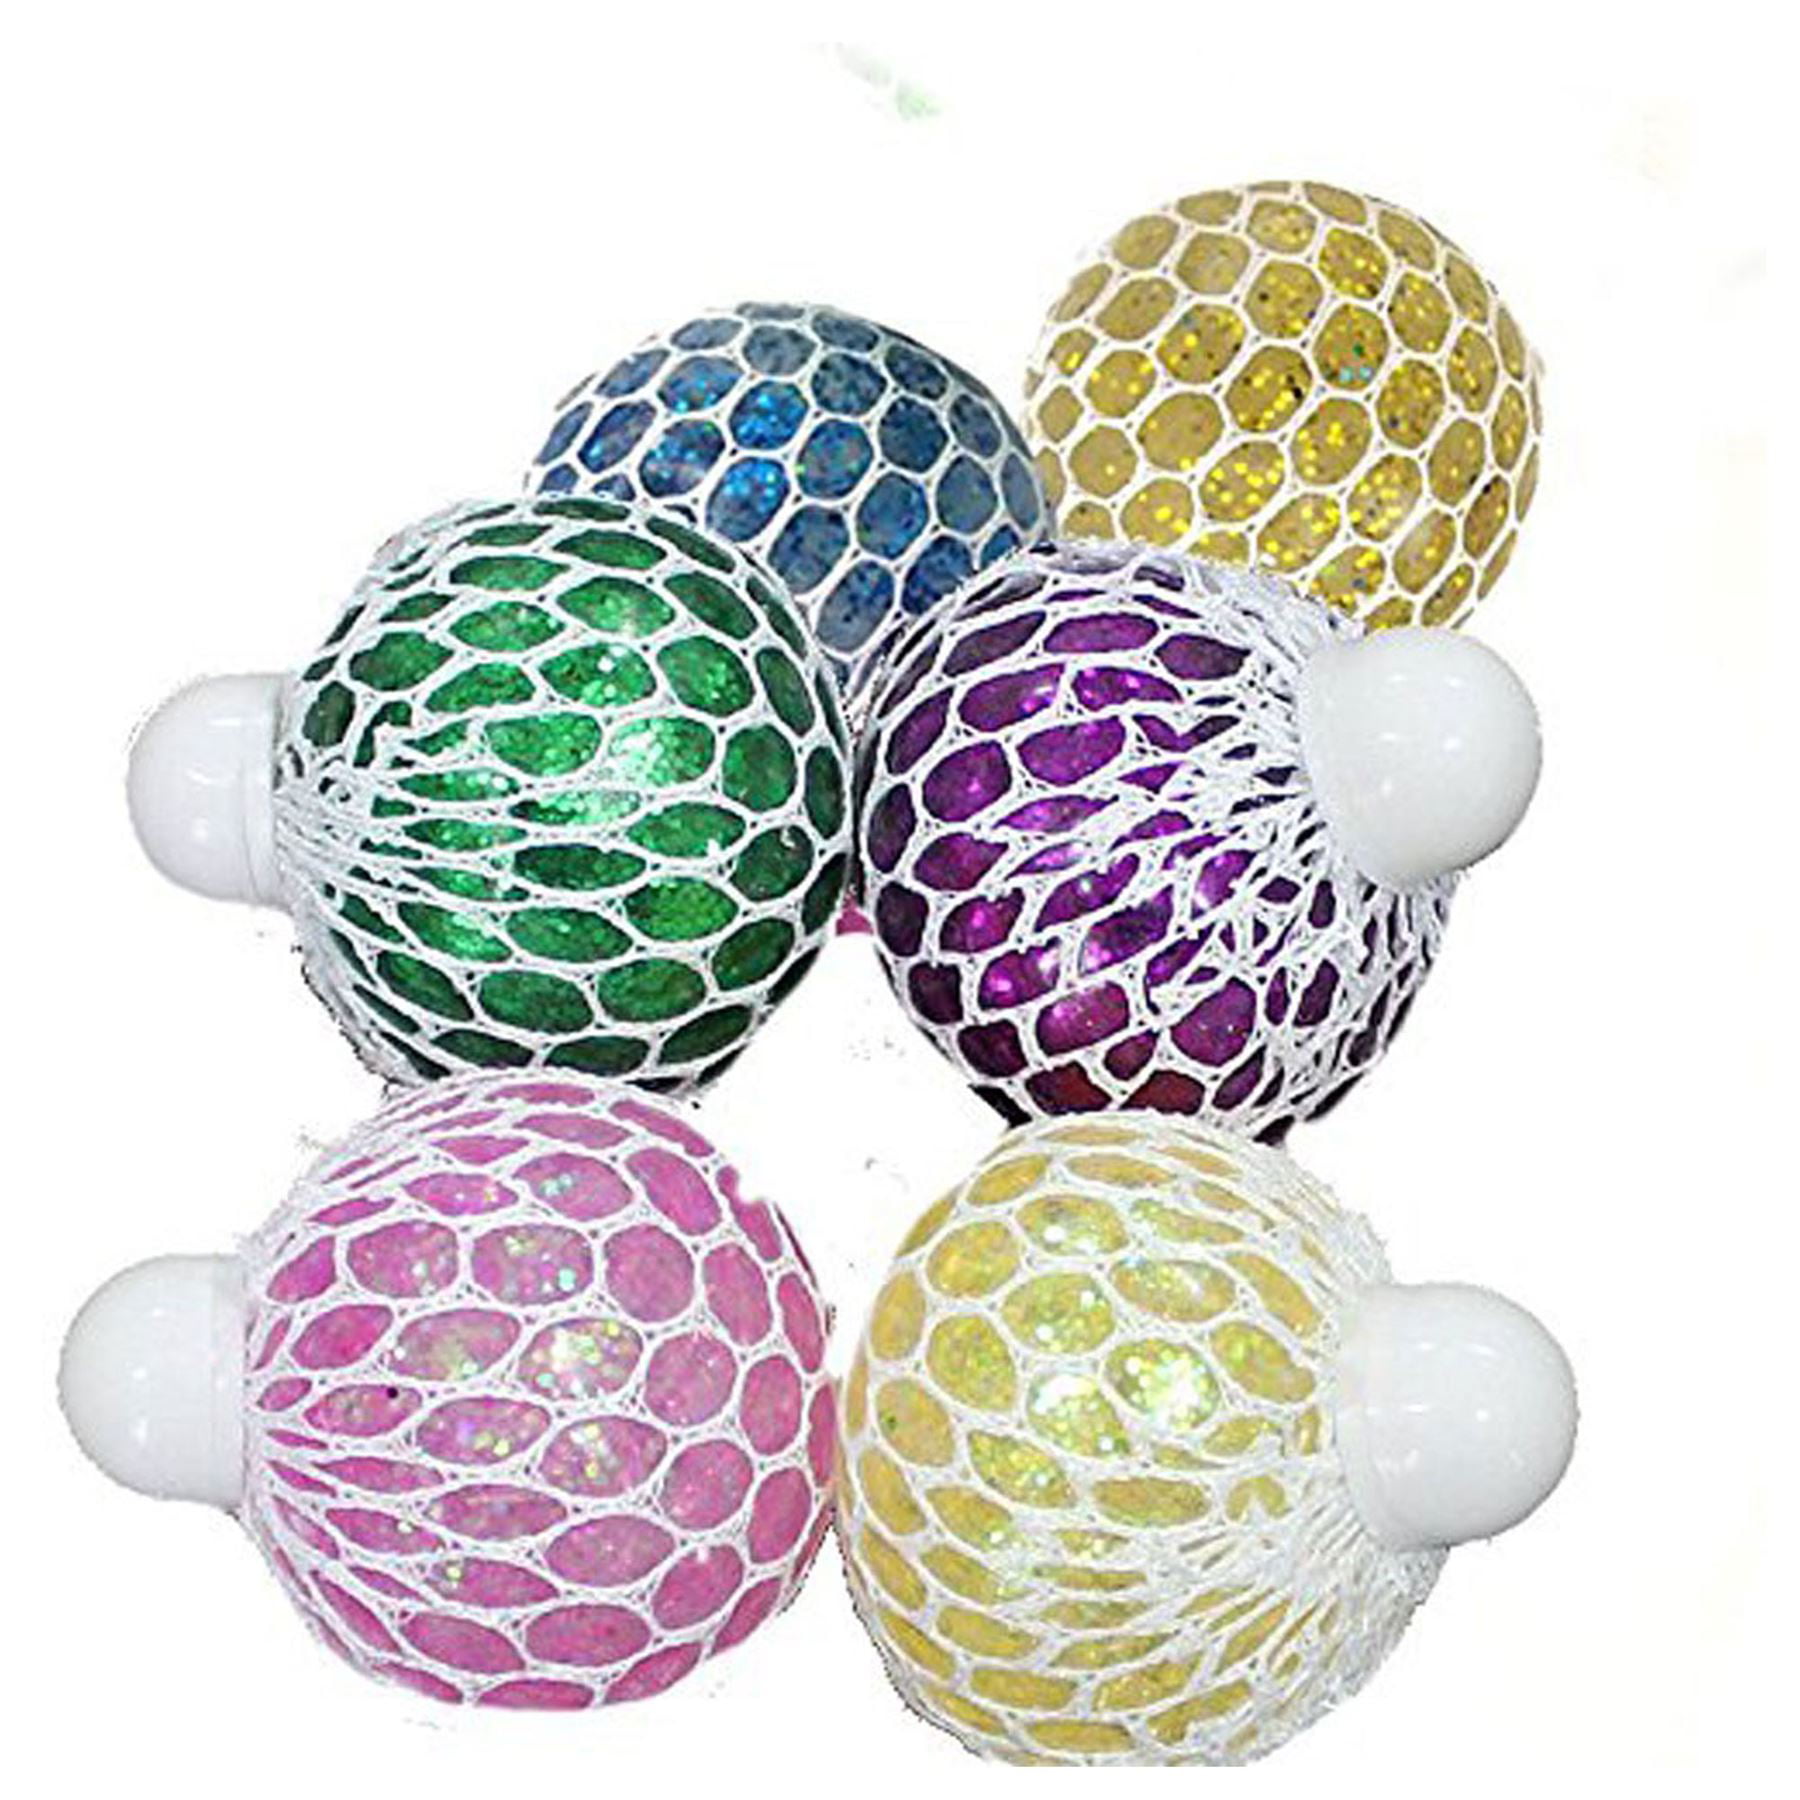 Stress Relief Party Bag Filler Sensory ADHT LED Light-Up Mesh Squish Balls 